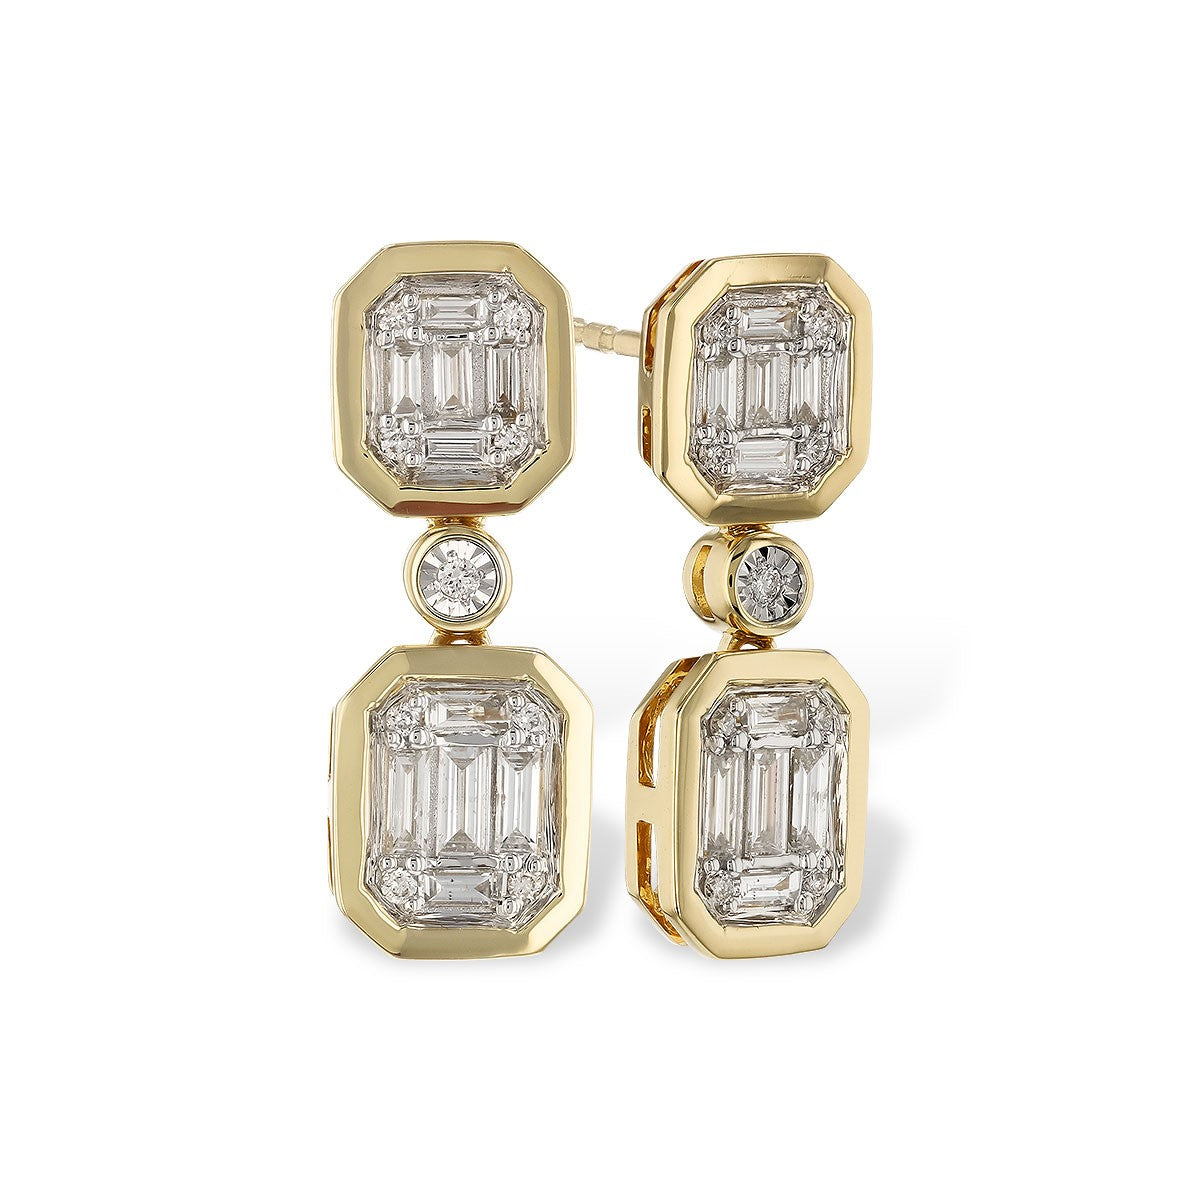 Allison Kaufman Co. 14 KT Yellow Gold Drop Diamond Earrings E2227